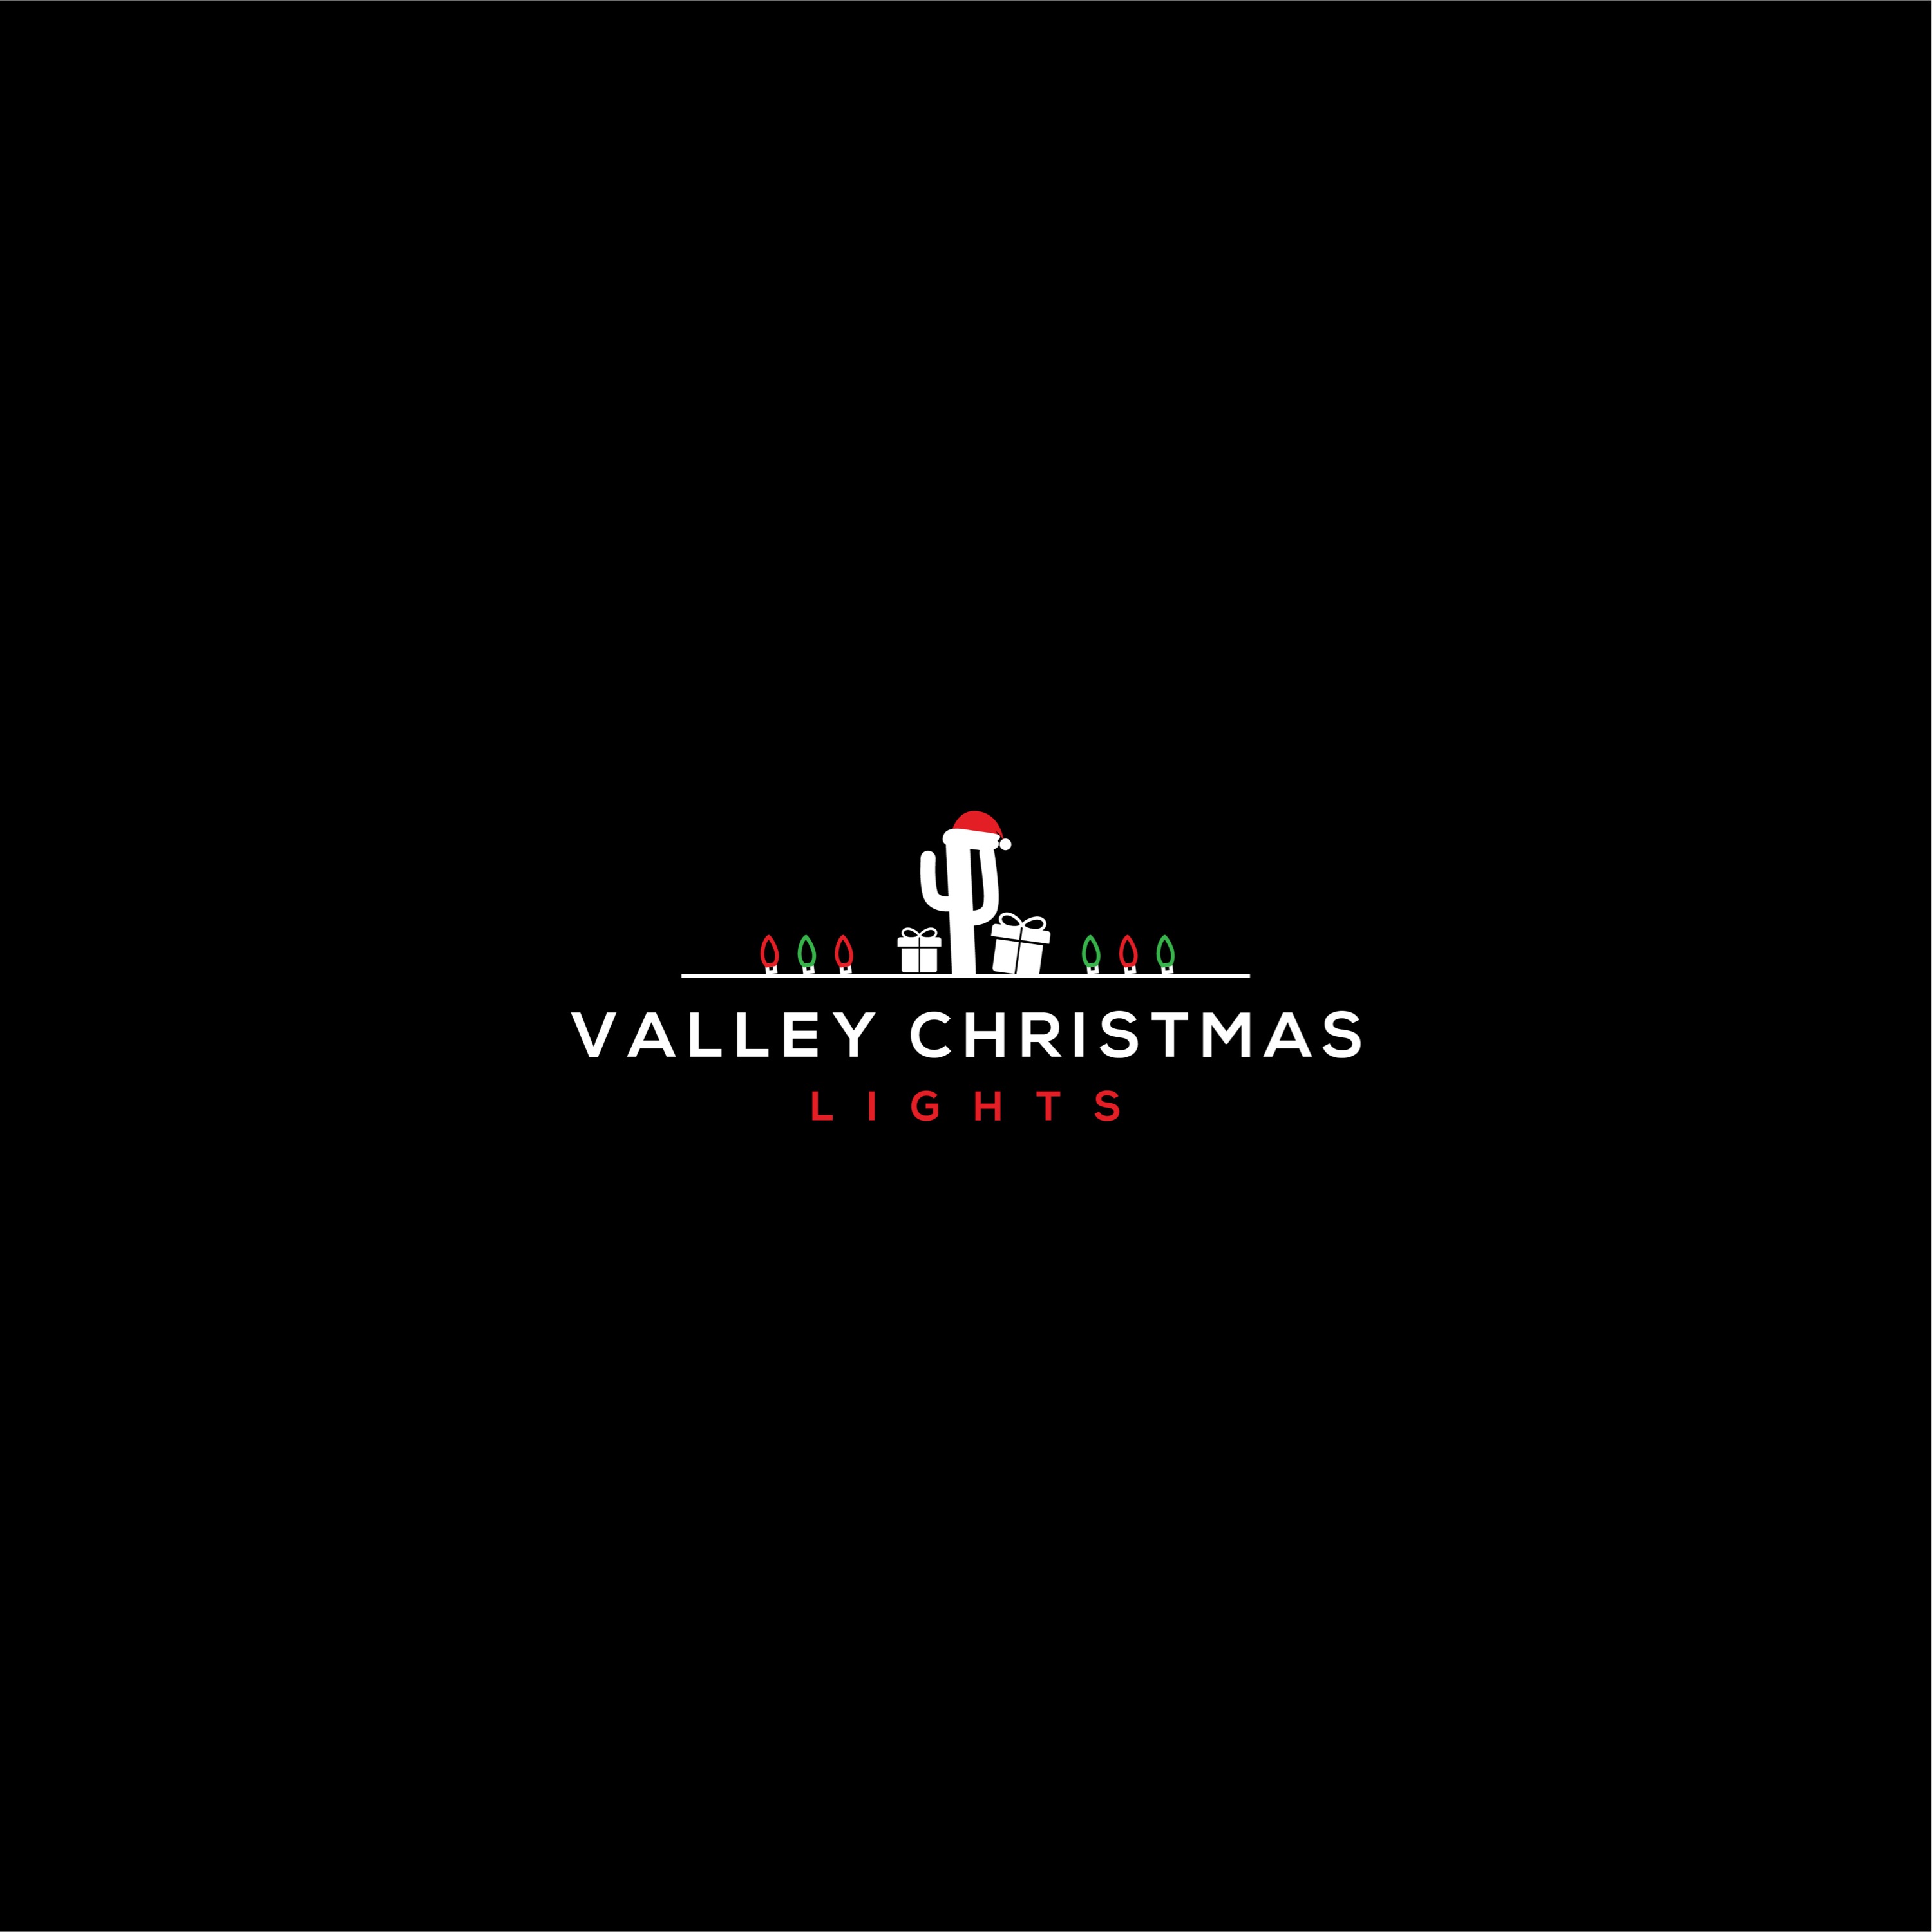 Valley Christmas Lights Logo